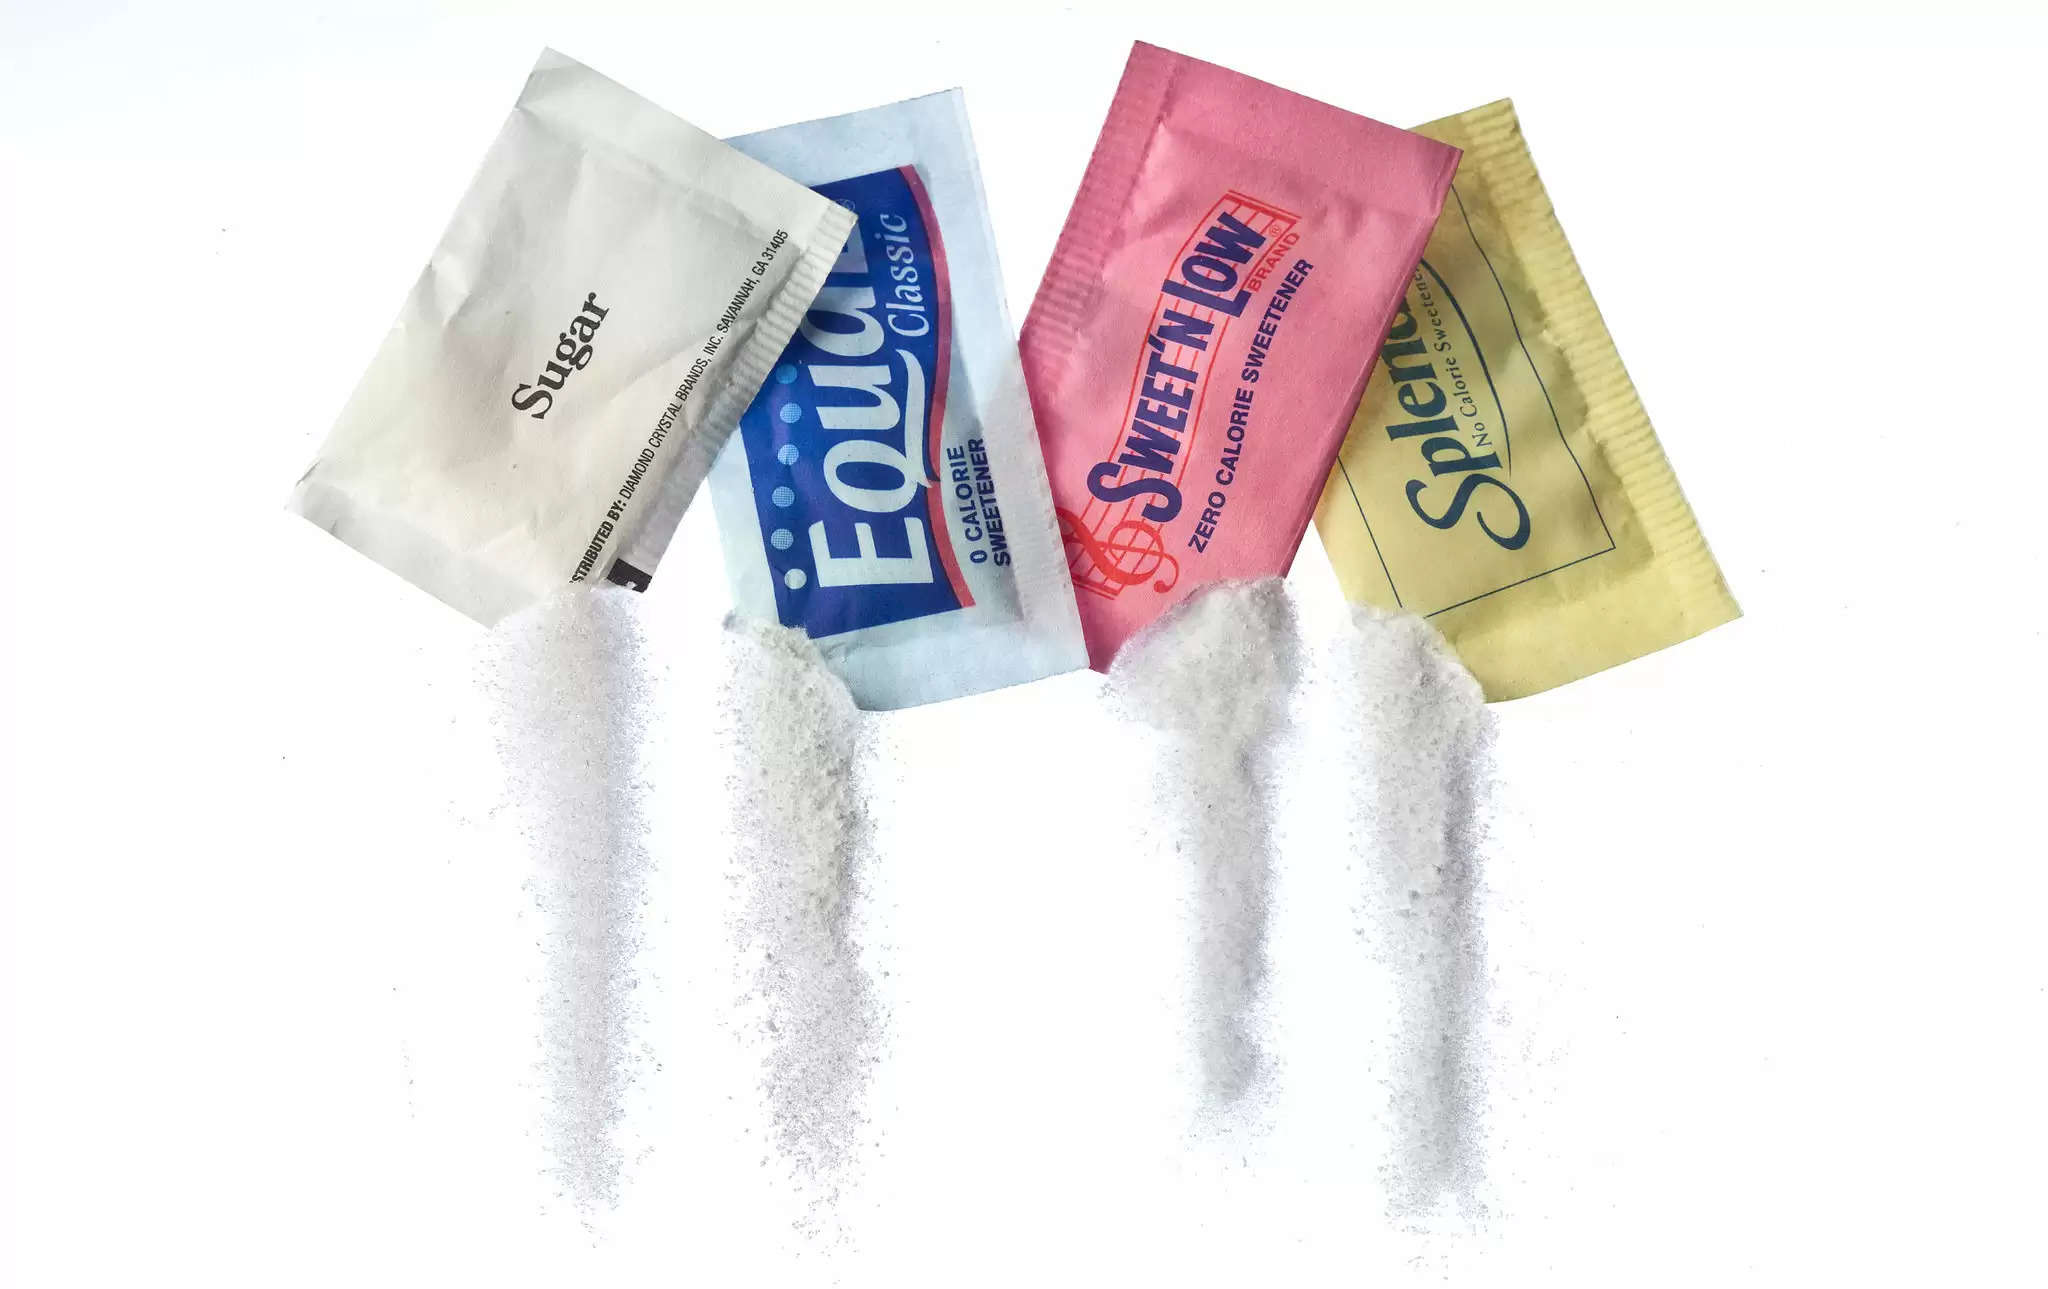 artificial sweeteners: